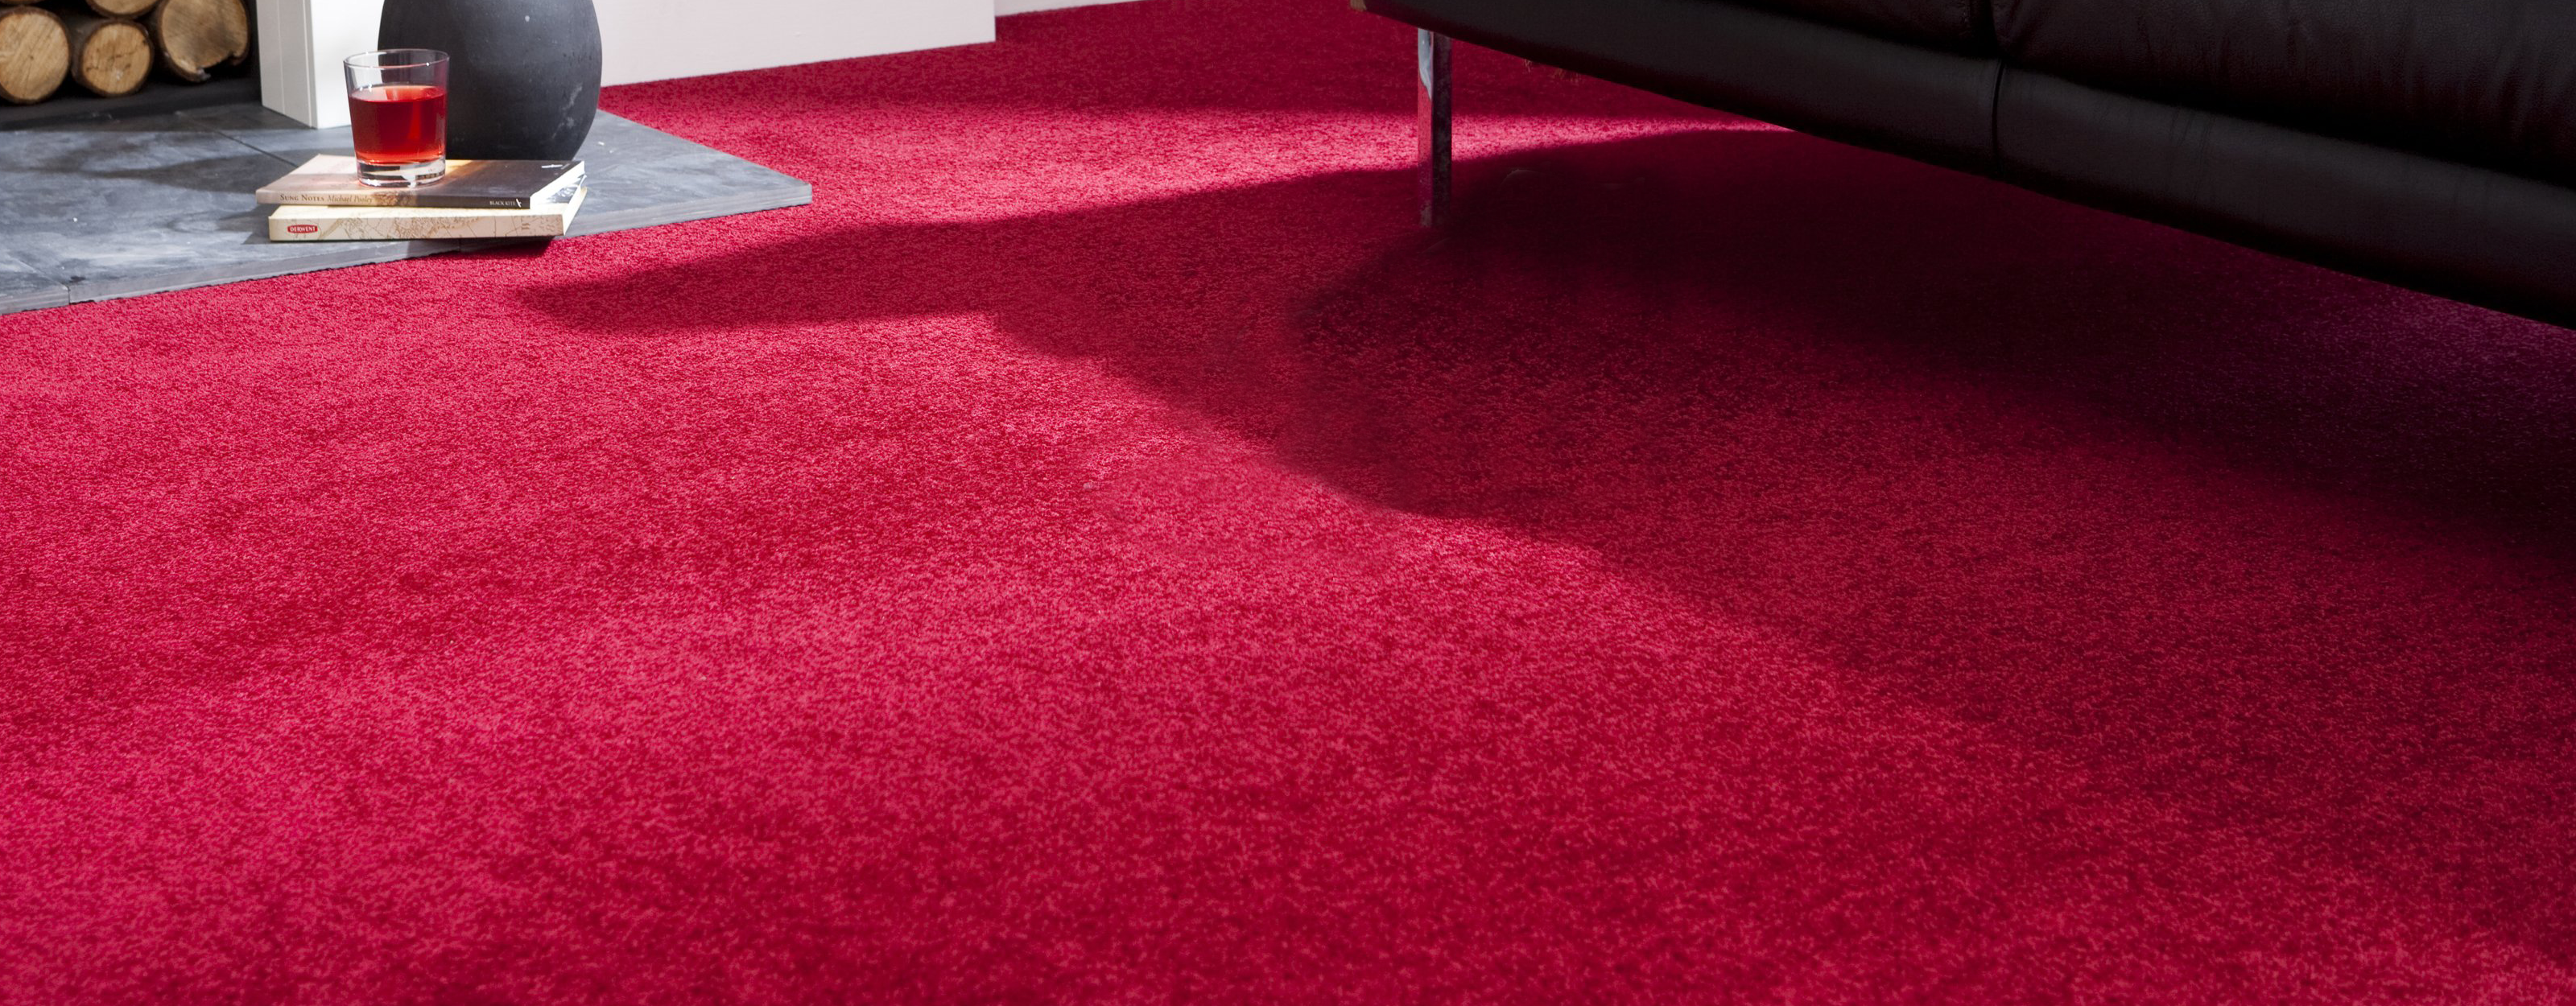 floor carpeting company